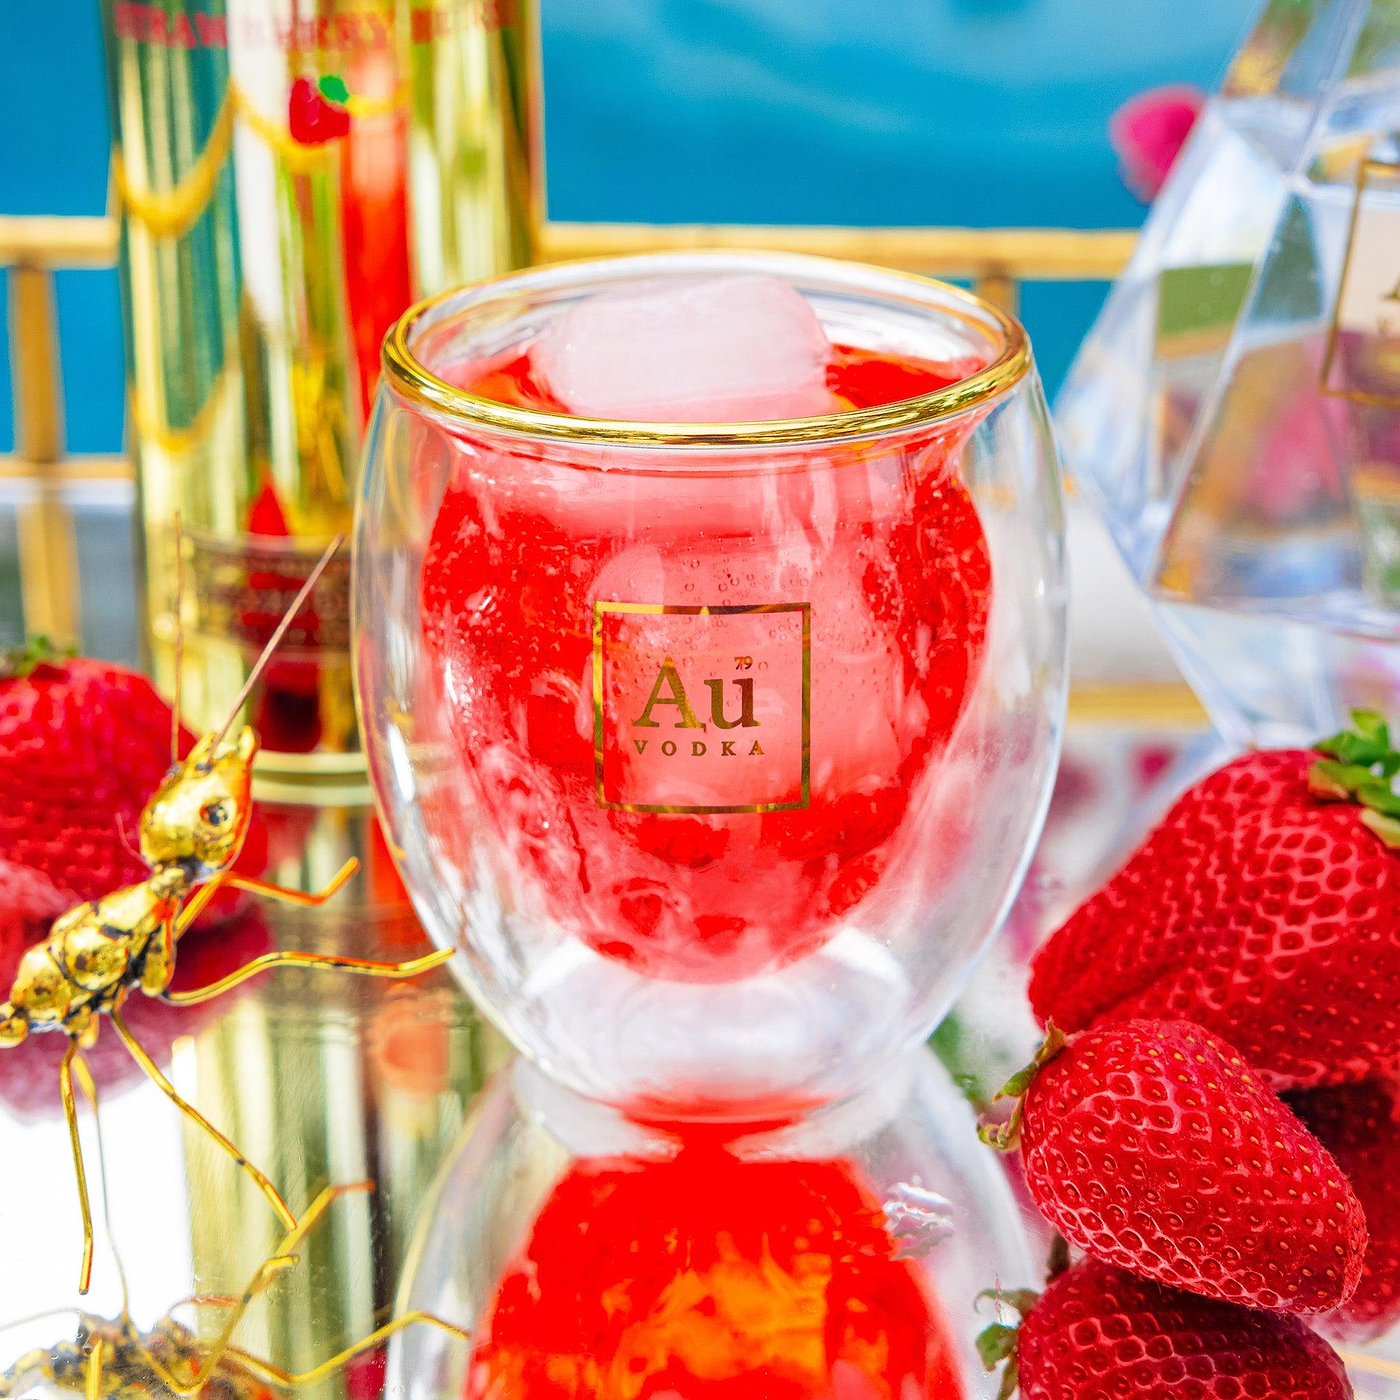 Limited Edition Au Strawberry Glass